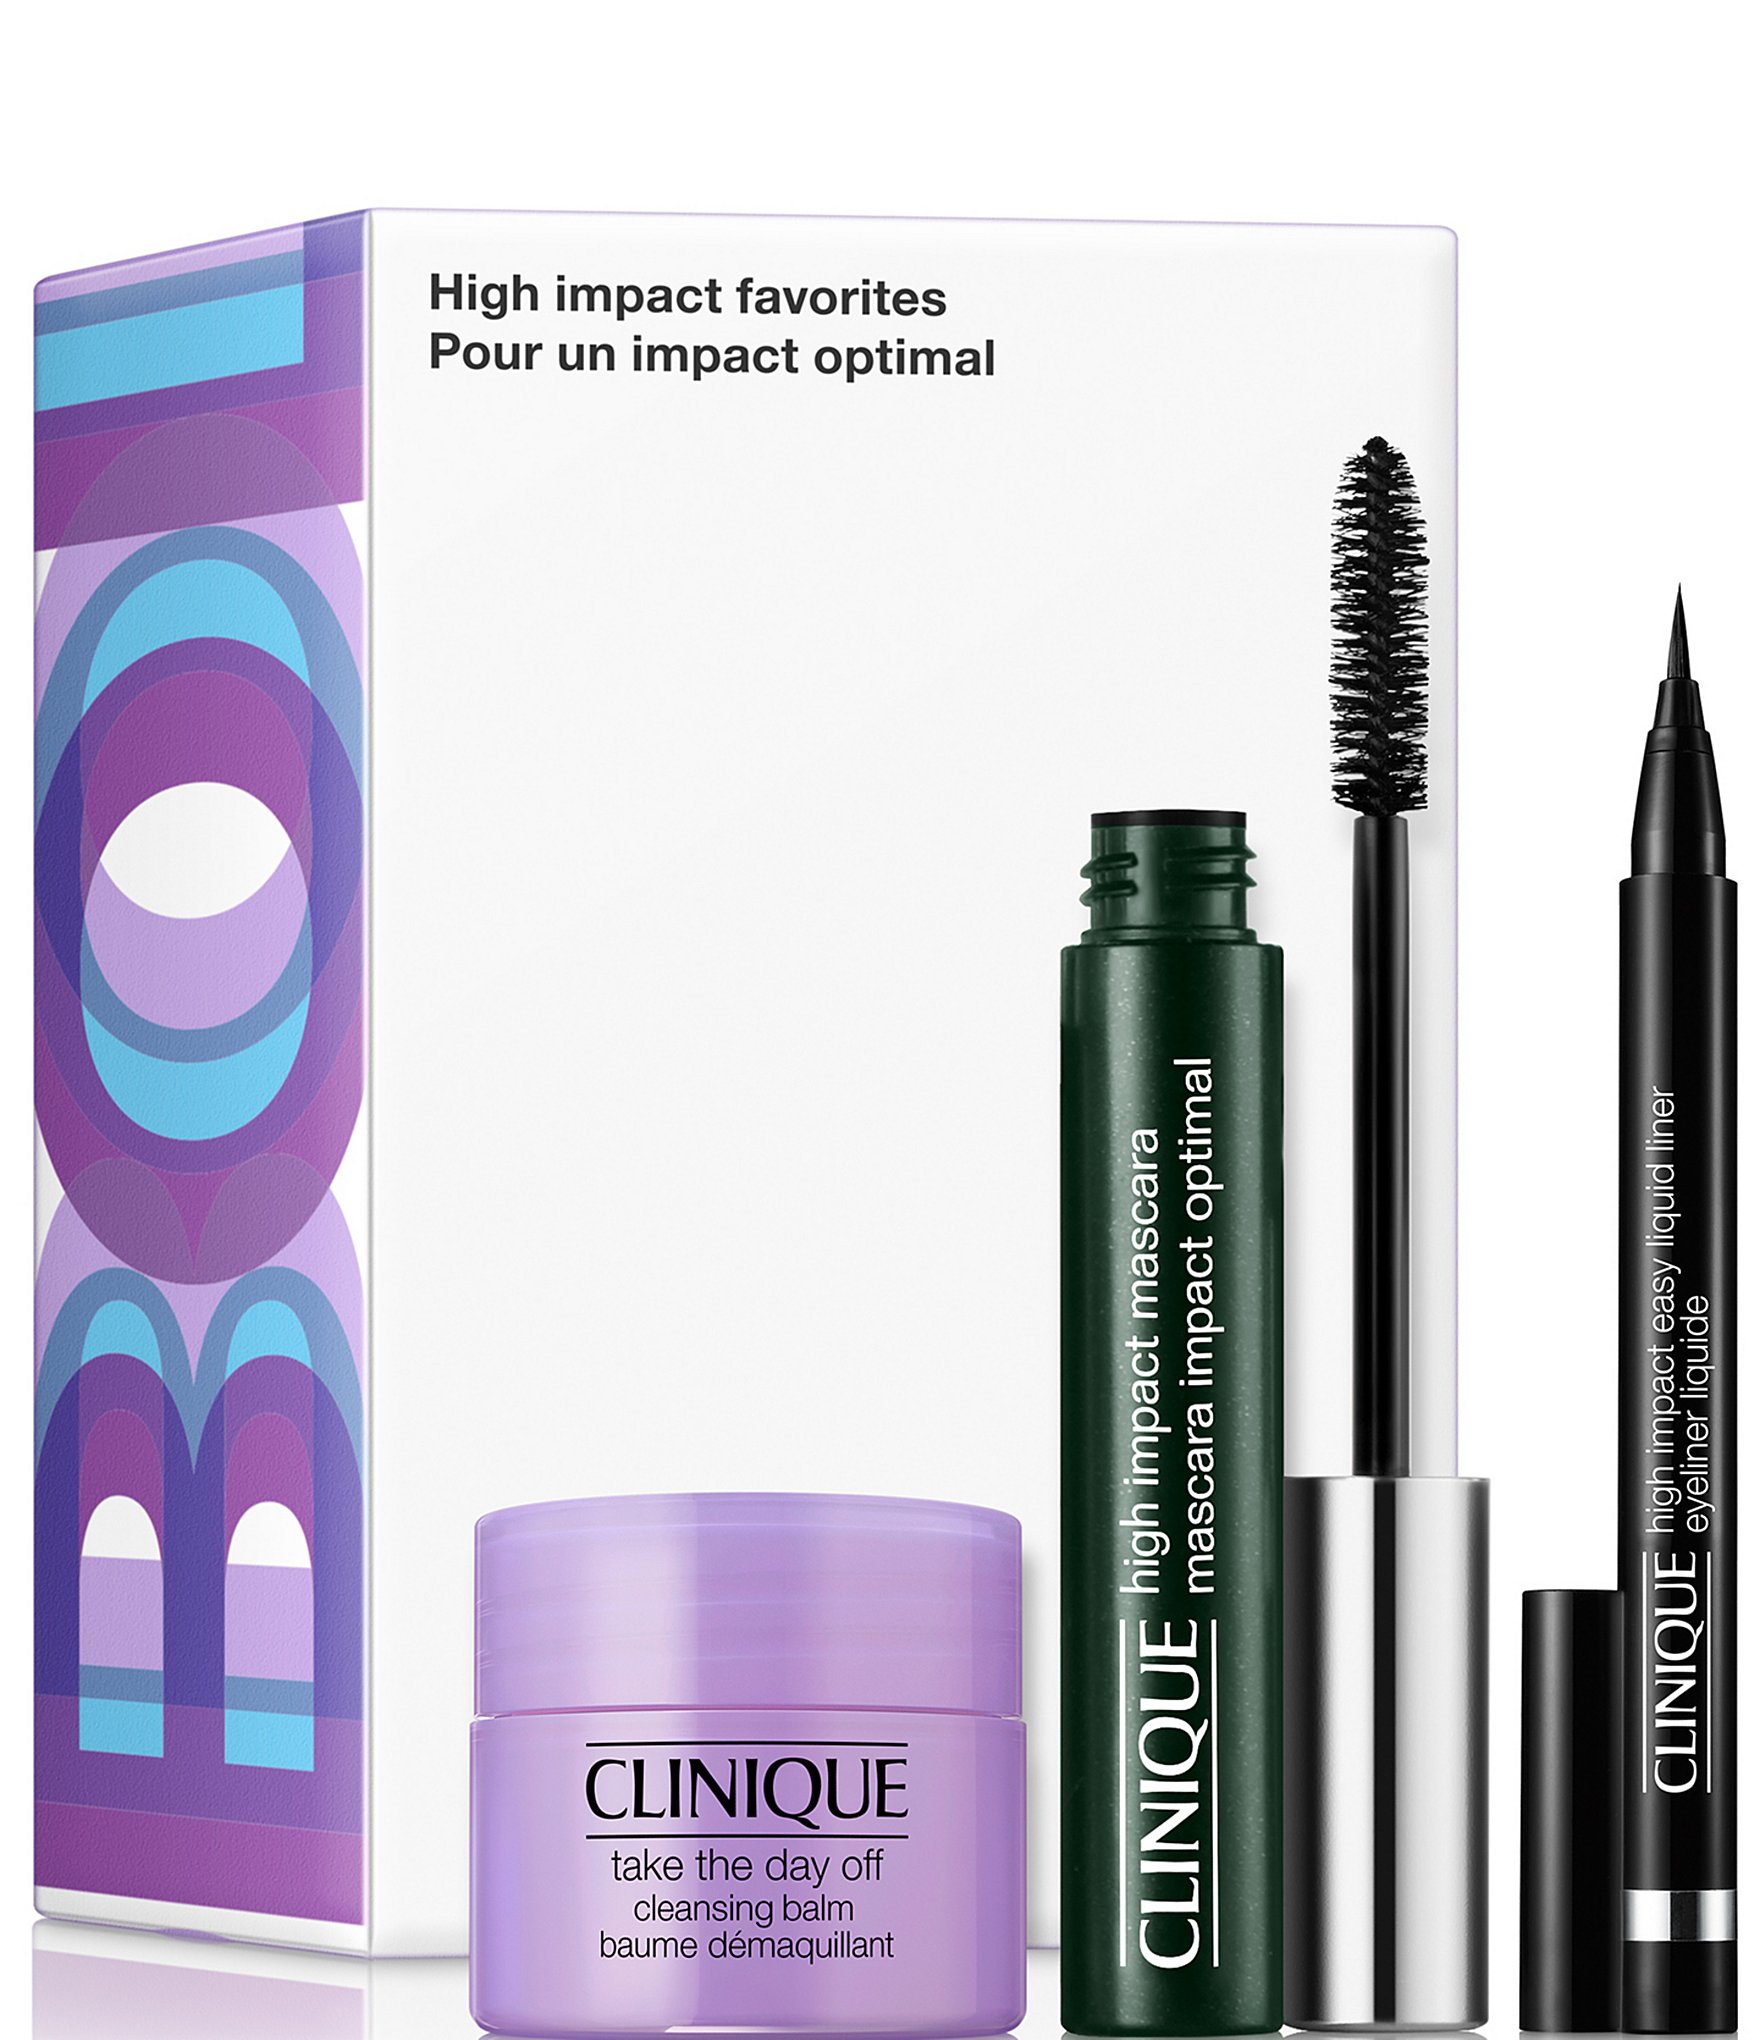 Biprodukt Premier assimilation Clinique High Impact Favorites Makeup Set | Dillard's